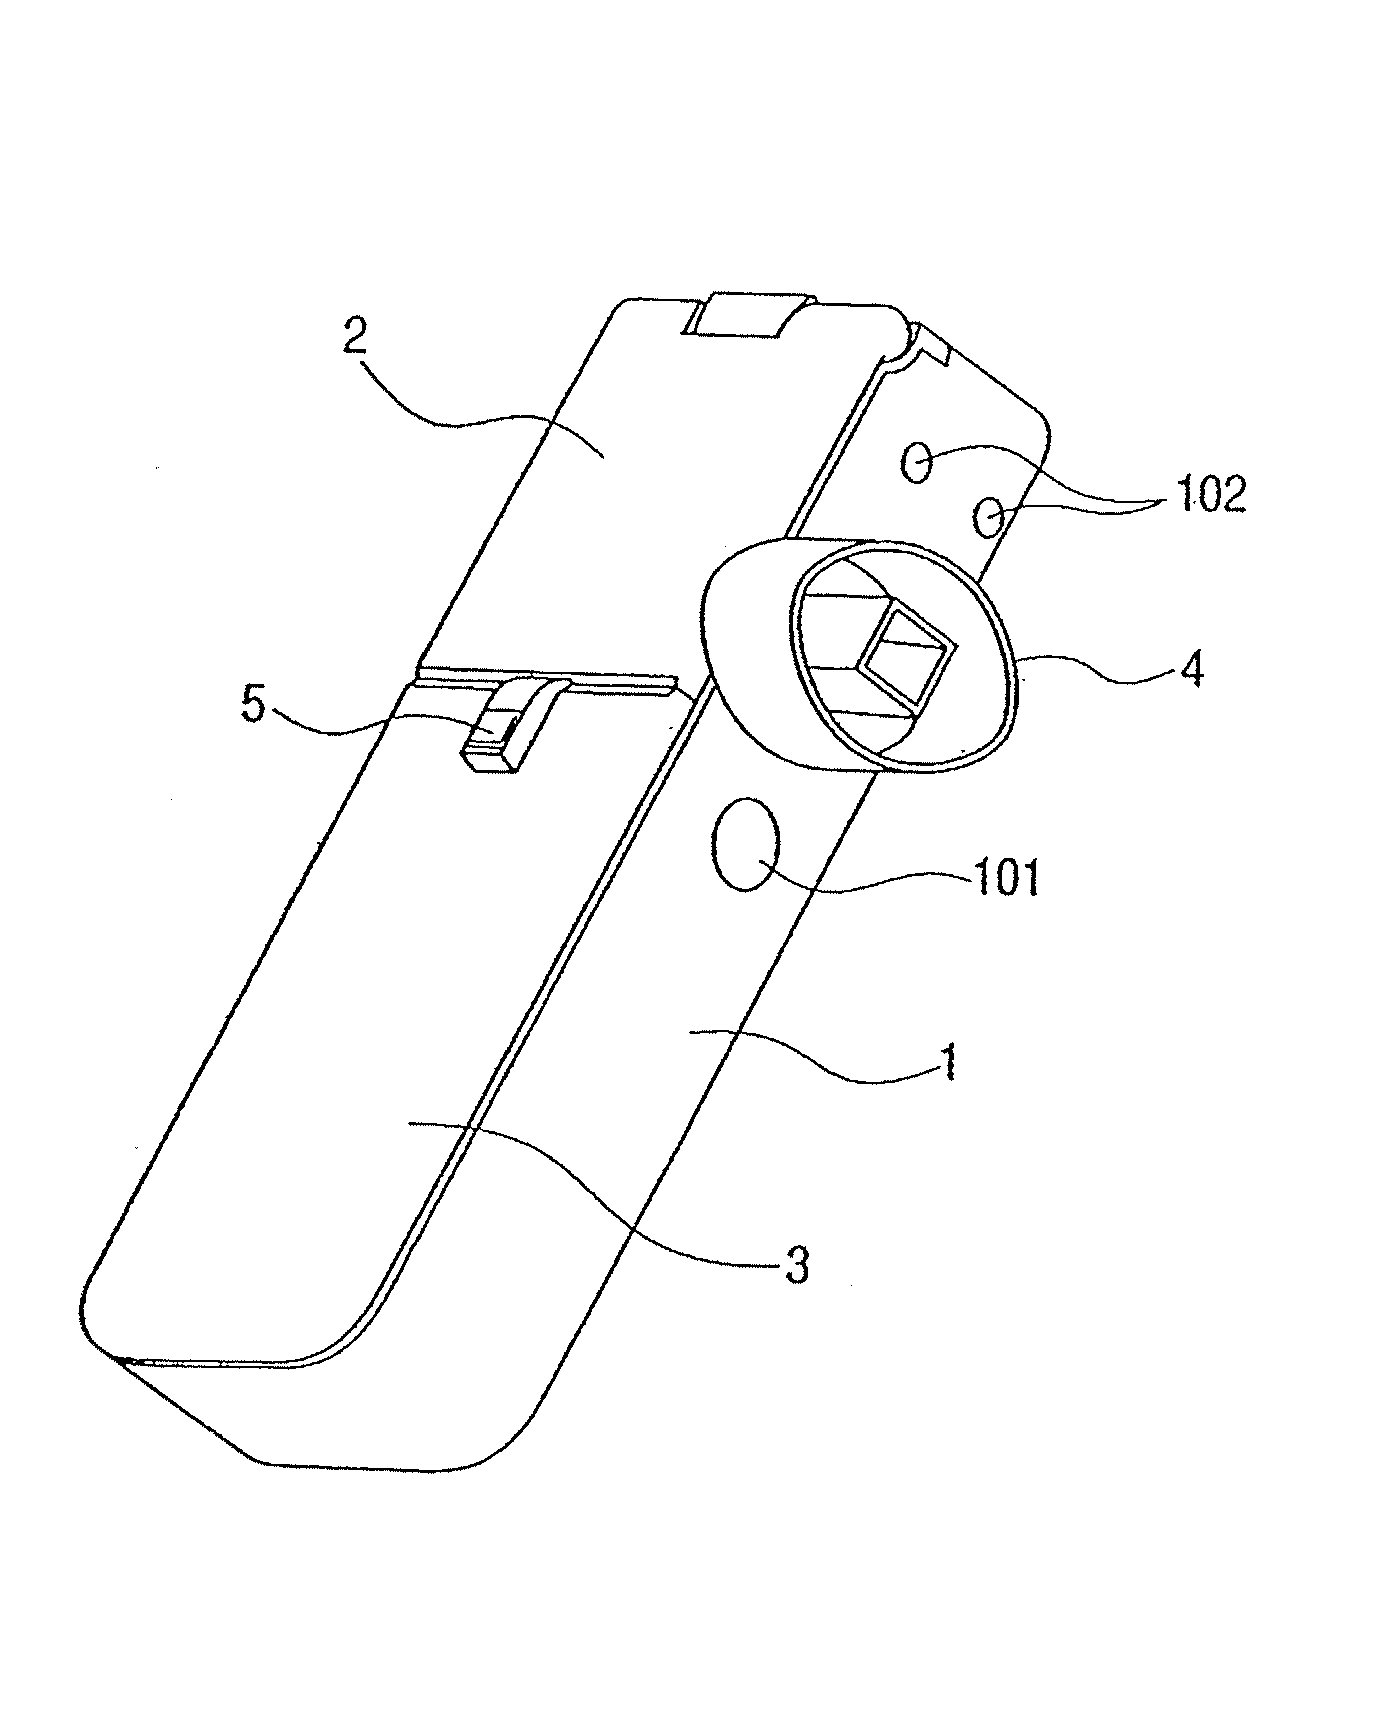 Liquid medication cartridge and inhaler using the cartridge